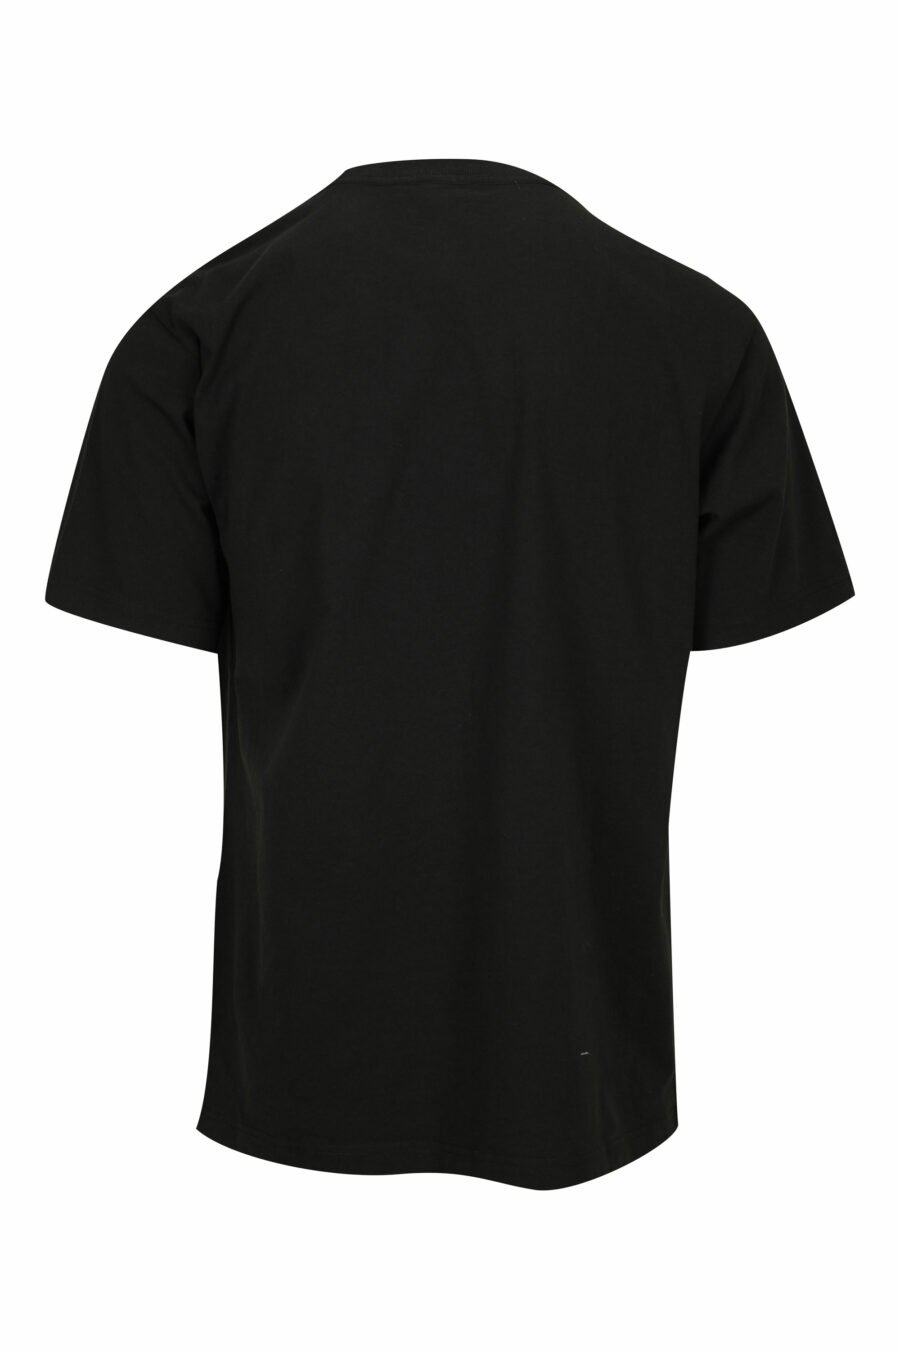 T-shirt noir avec maxilogo diagonal "kenzo orange" - 3612230626997 1